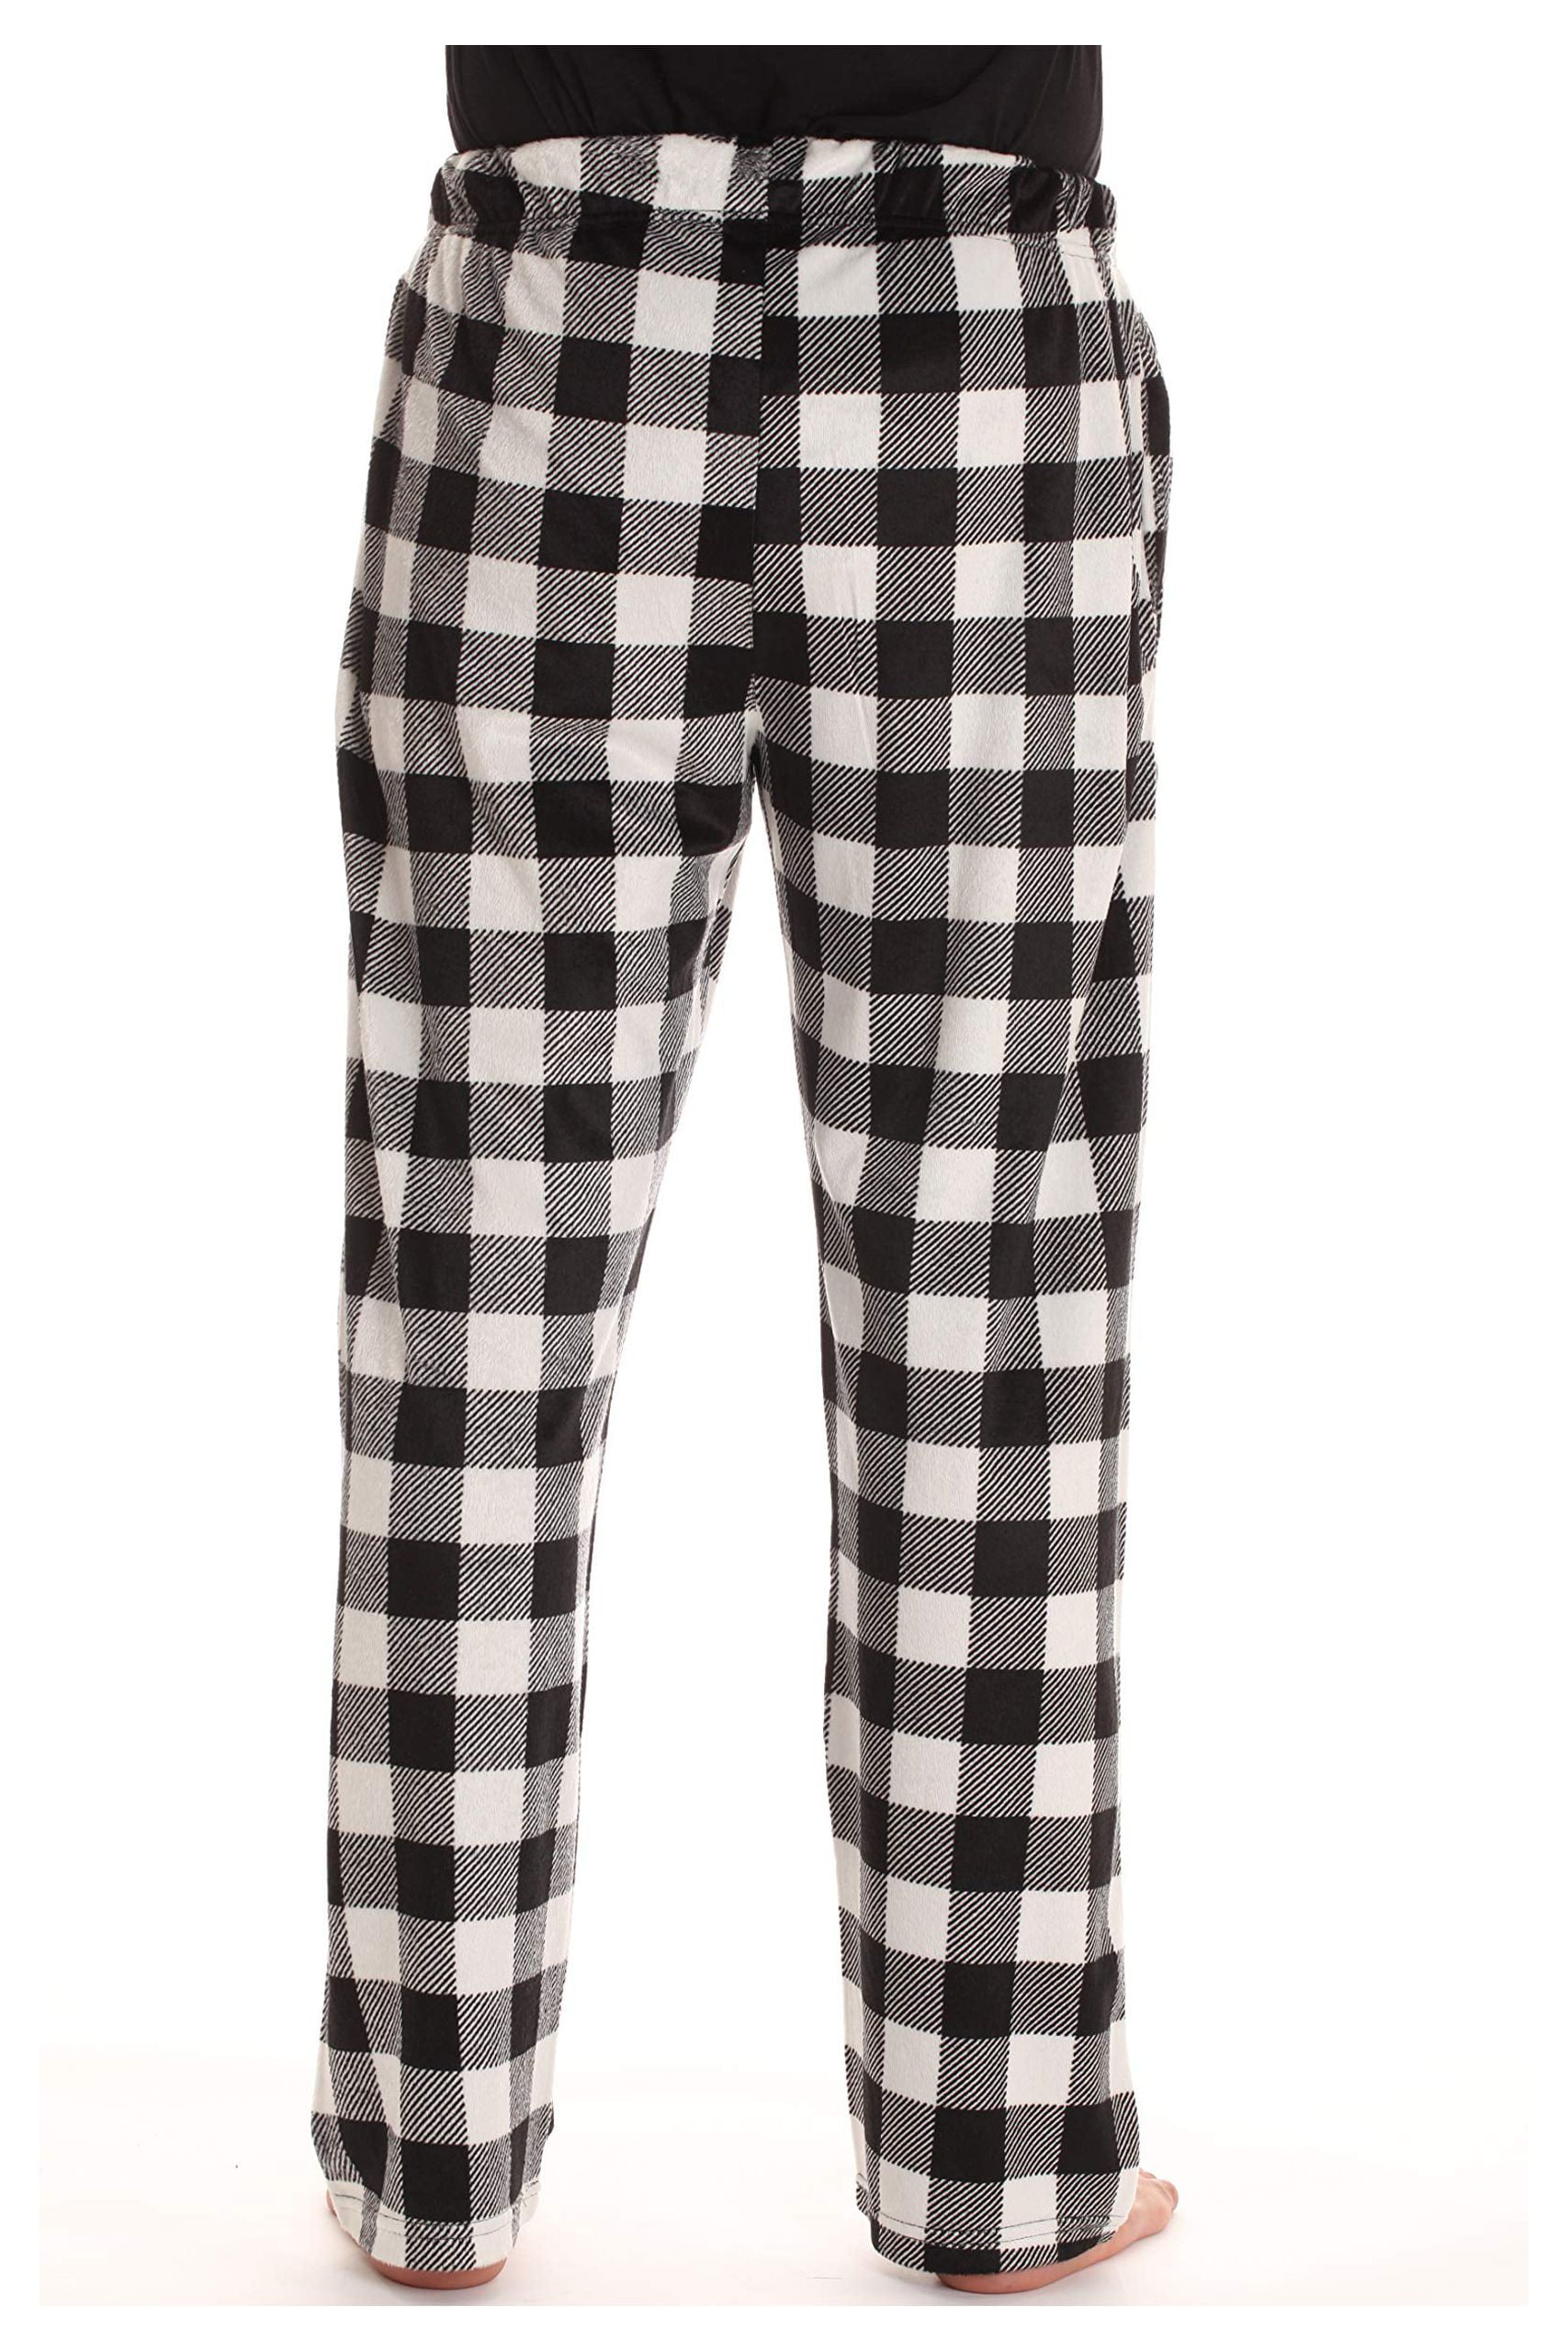 followme Ultra Soft Fleece Men's Plaid Pajama Pants with Pockets (Black &  White Buffalo Plaid, X-Large) 